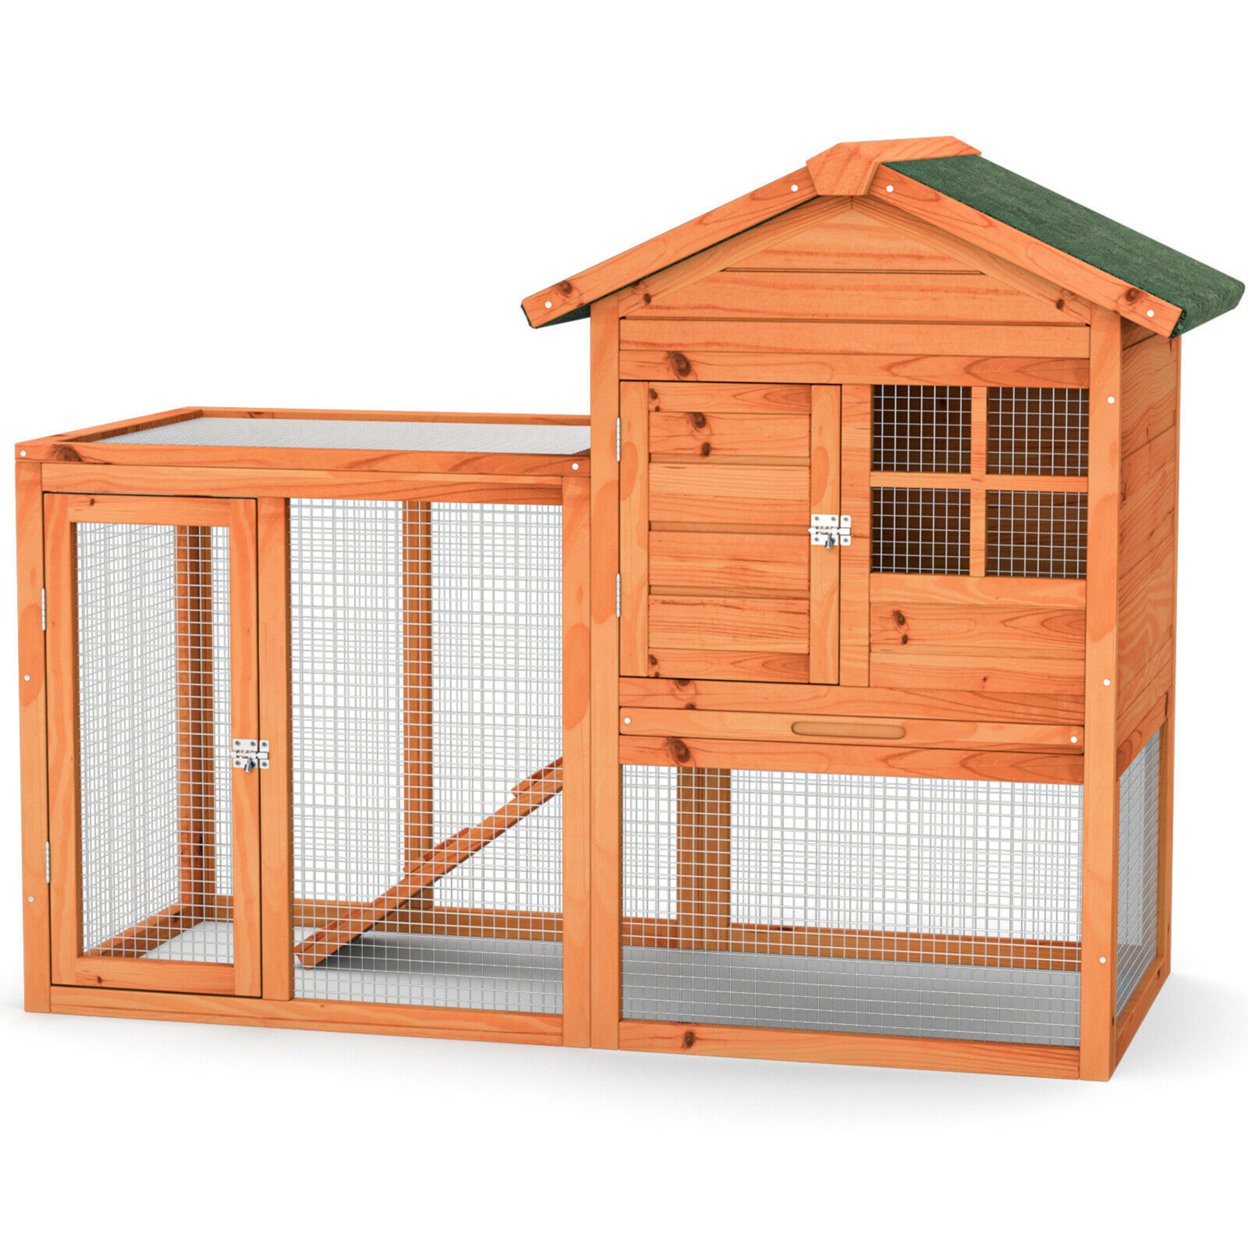 Wooden Chicken Coop 2-Story Rabbit Hutch Indoor Outdoor Use - Red + White + Black